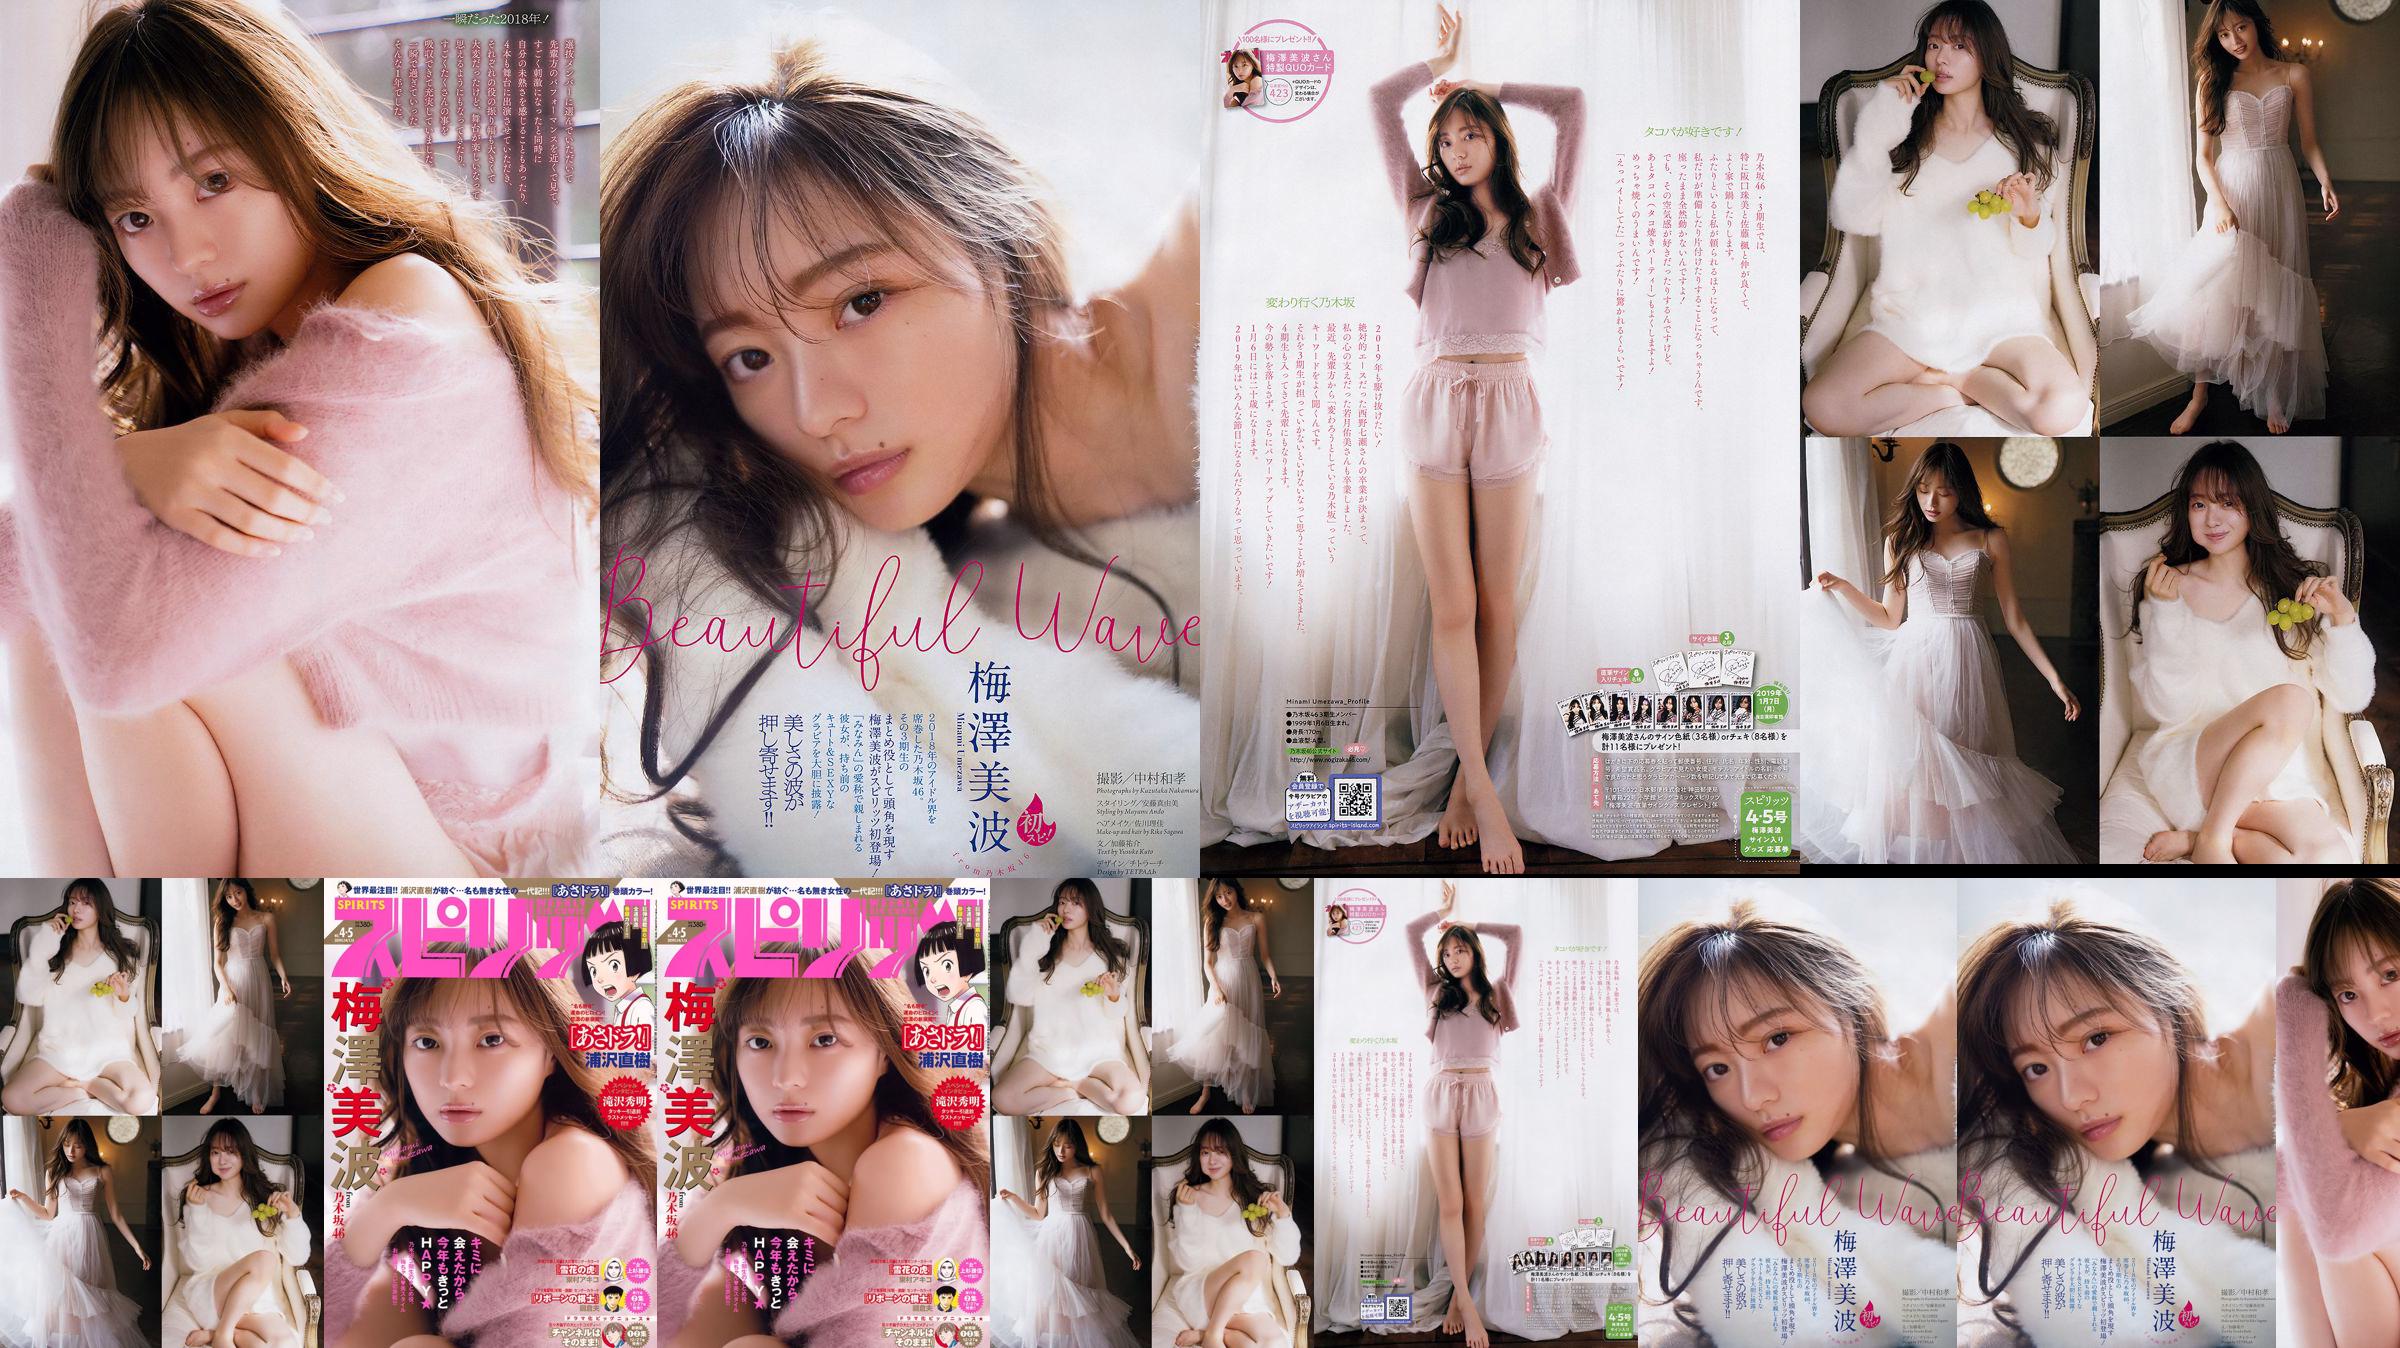 [Wöchentliche große Comic-Geister] Minami Umezawa 2019 No.04-05 Photo Magazine No.d68a9d Seite 1